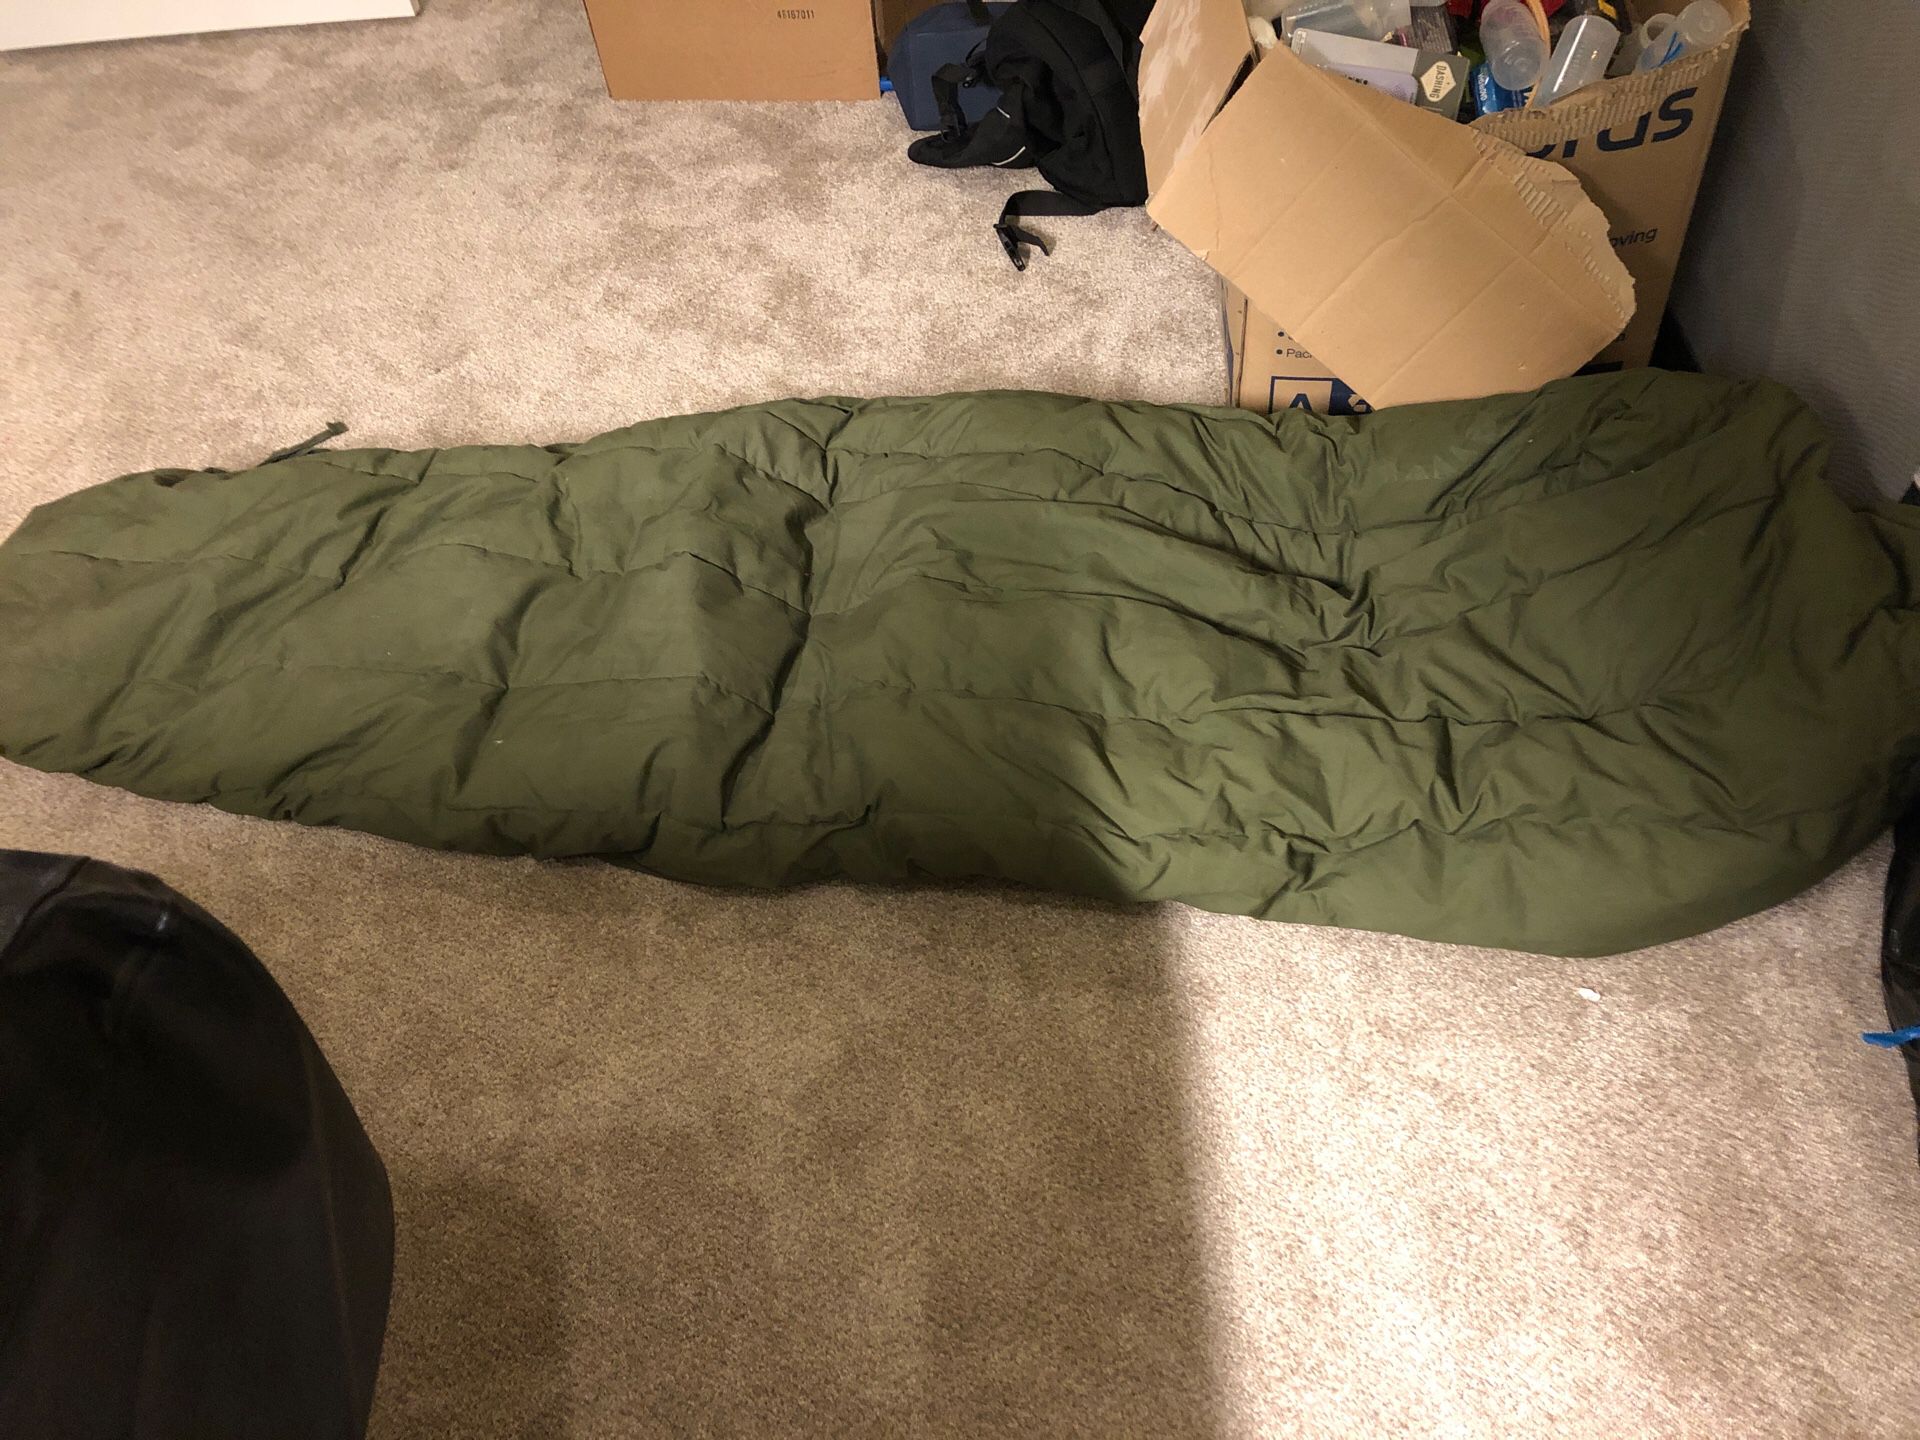 Military grade sleeping bag